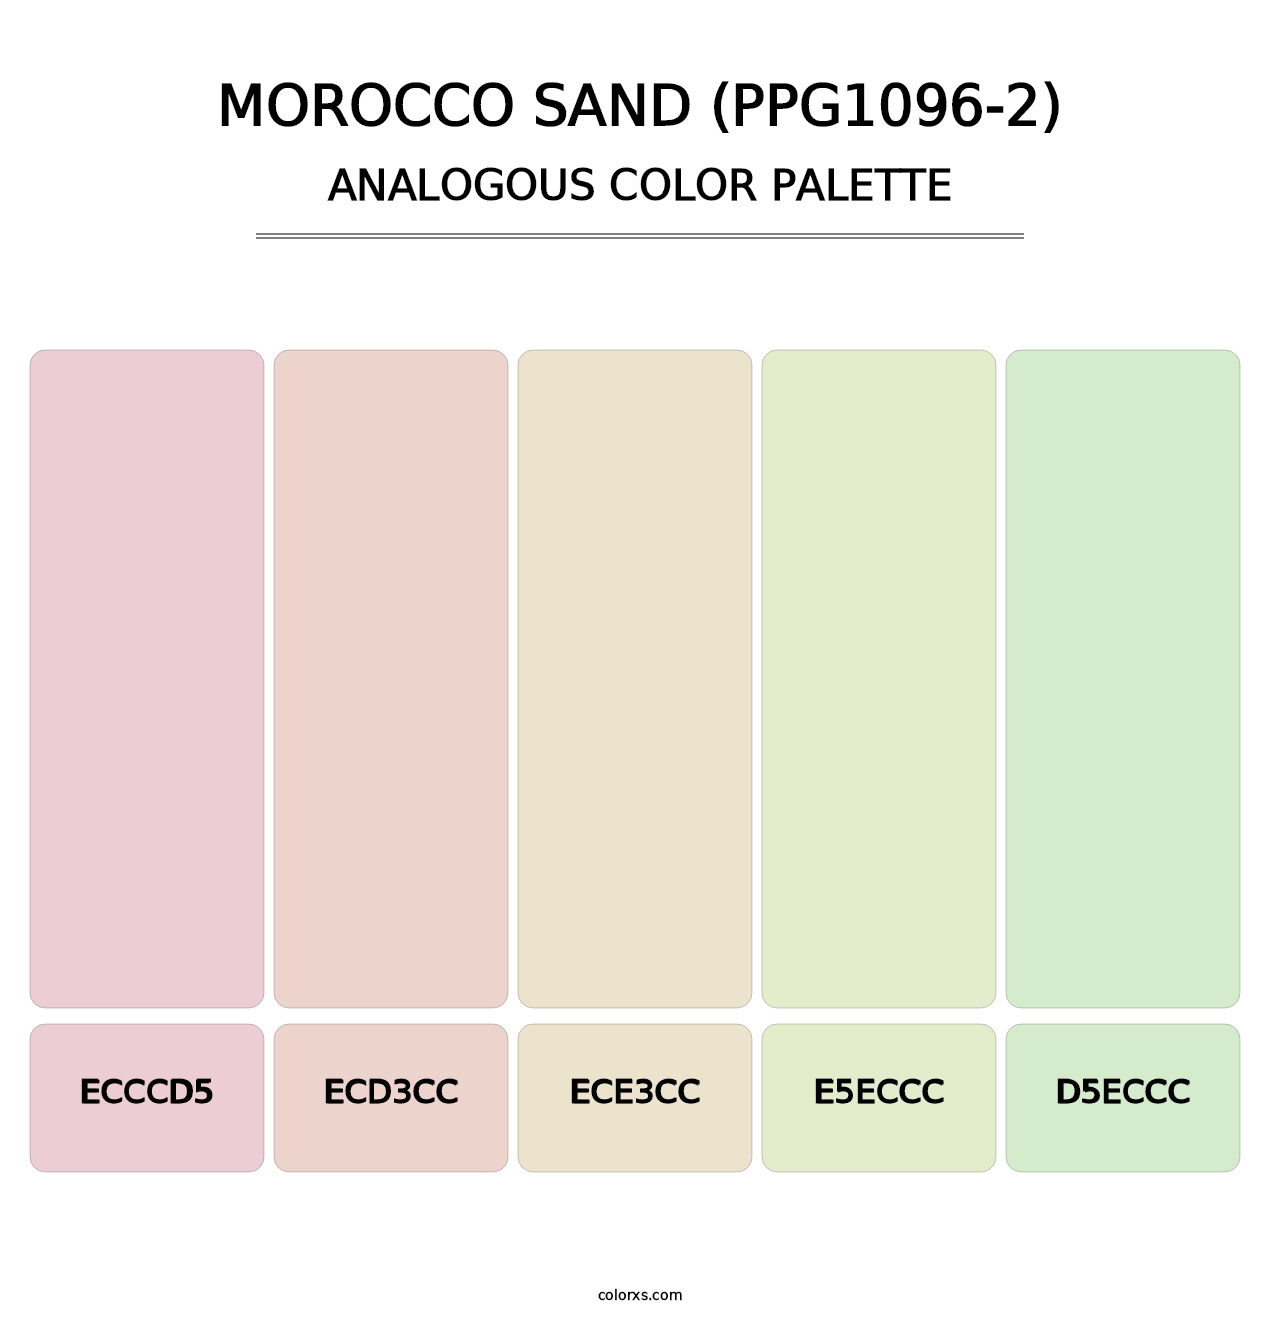 Morocco Sand (PPG1096-2) - Analogous Color Palette